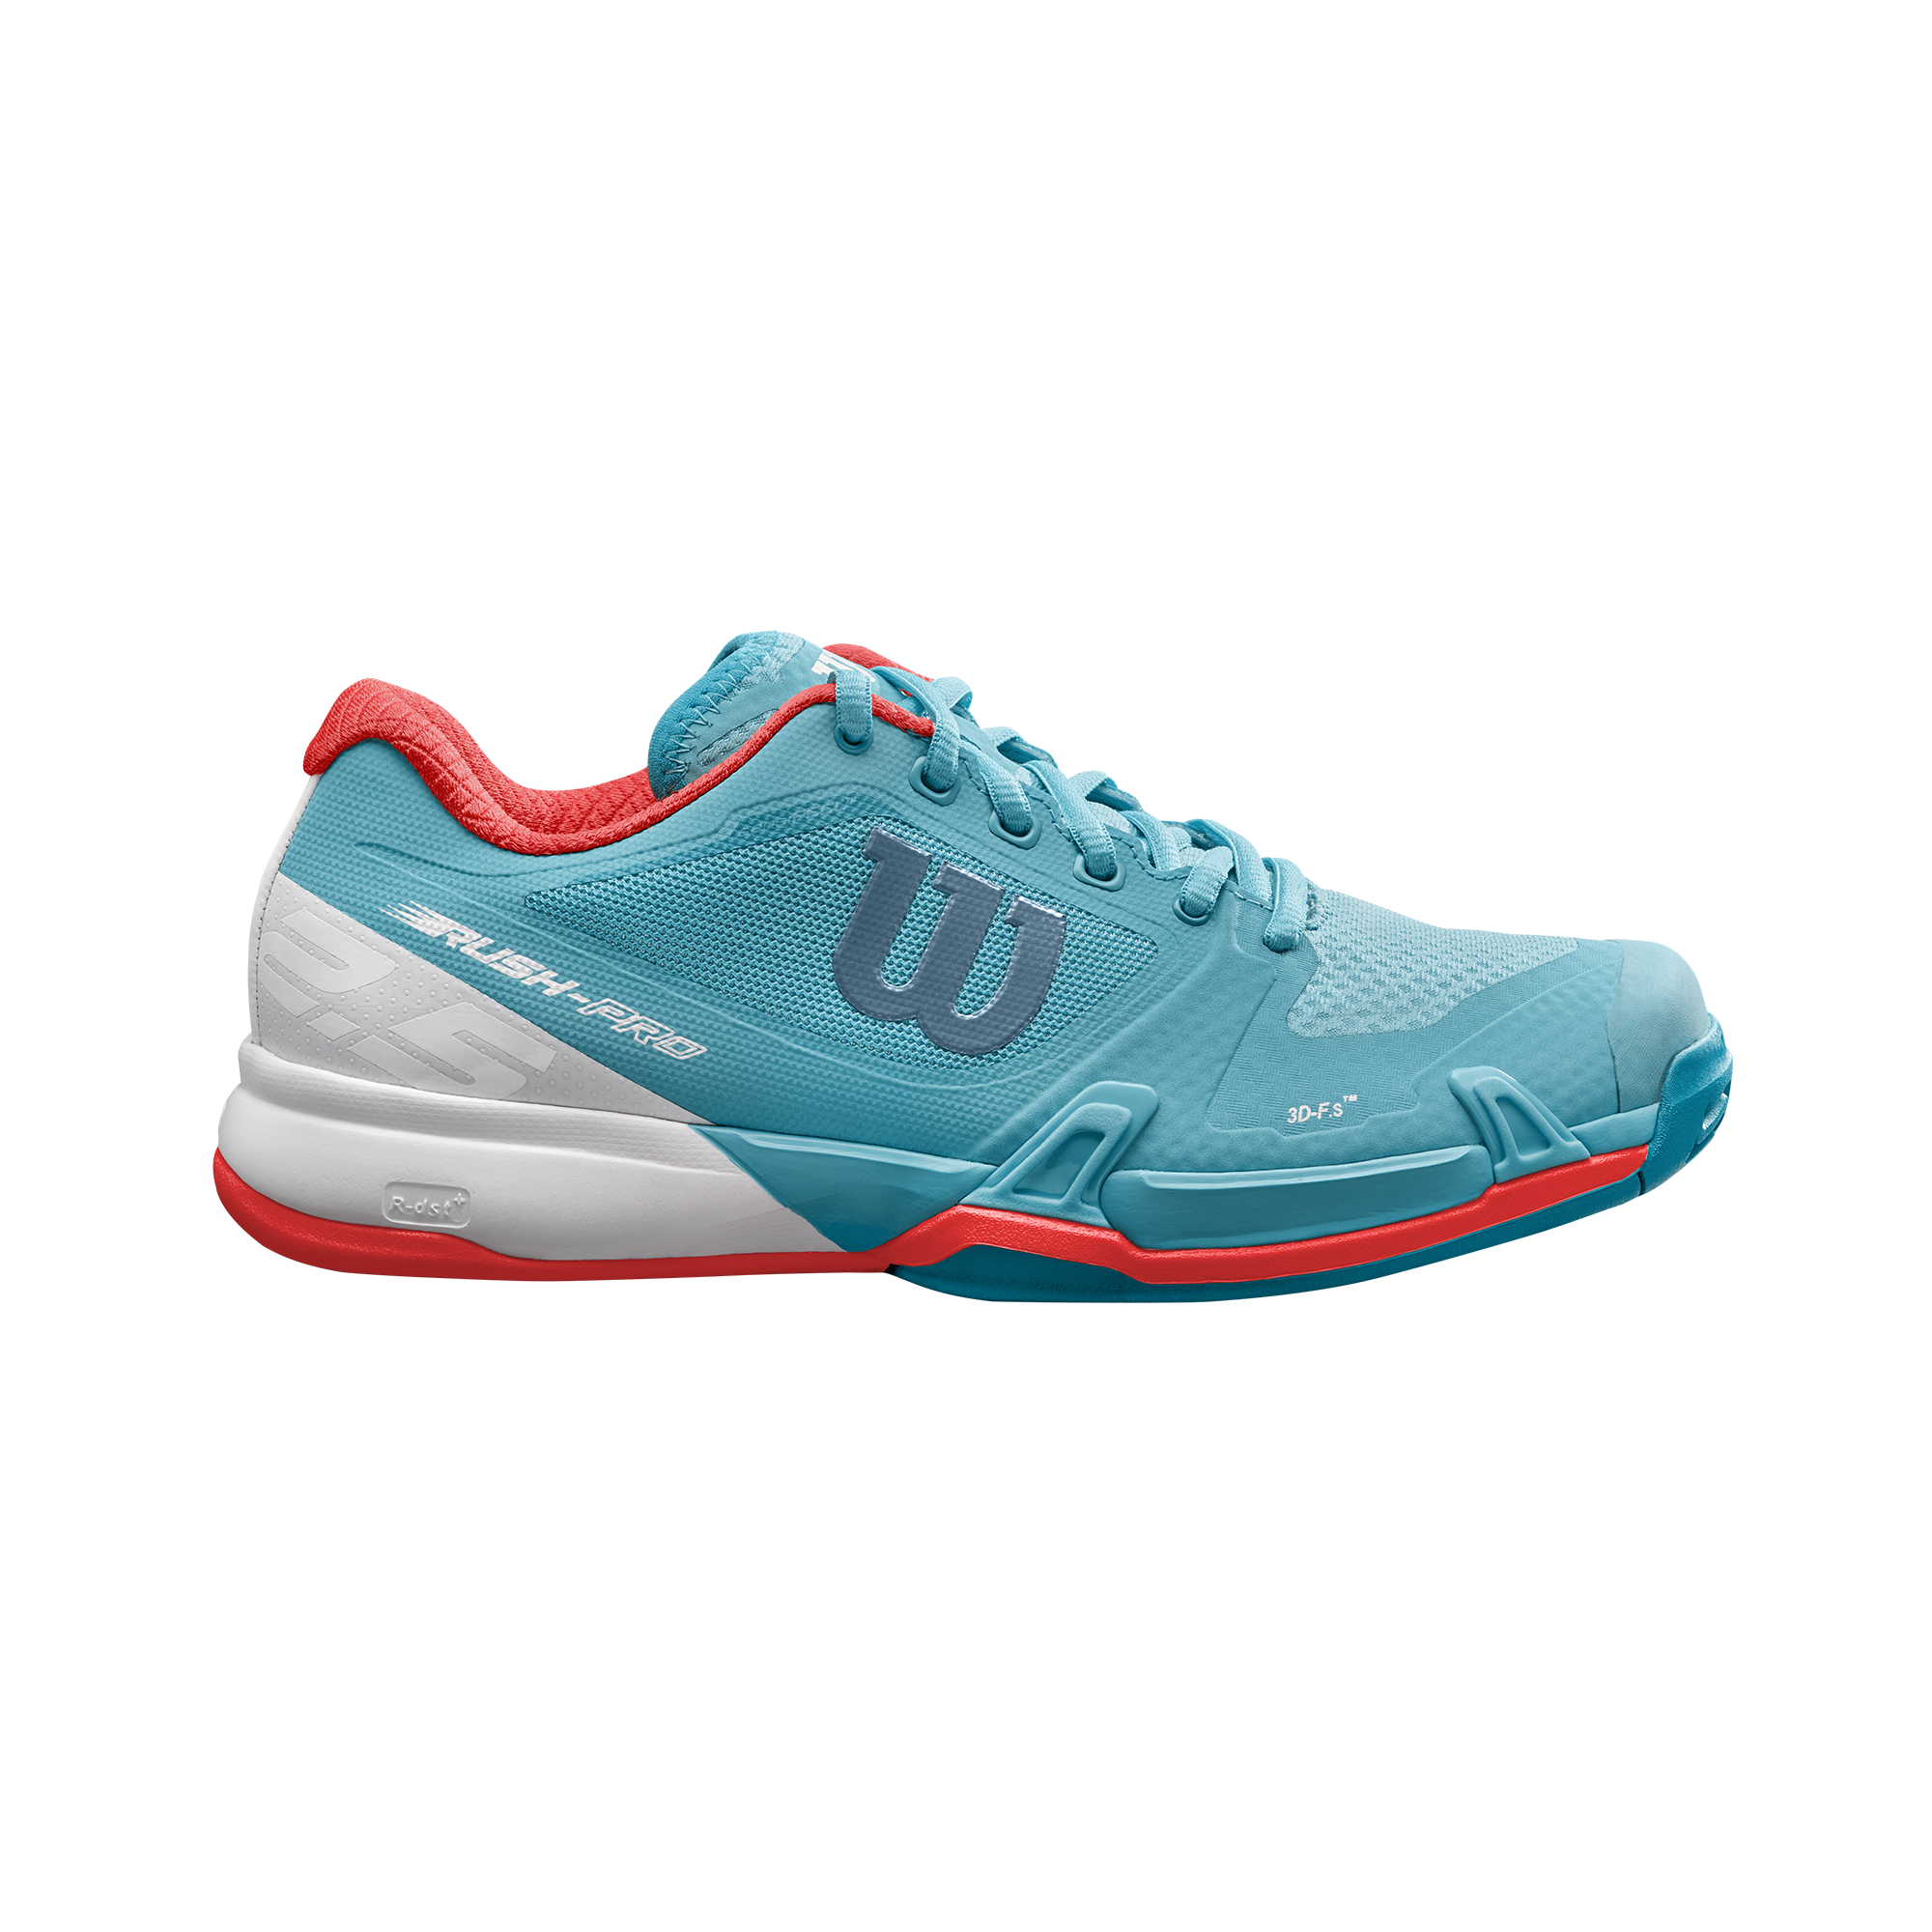 white/blue WILSON RUSH PRO womens tennis shoes sneakers Reg $130 